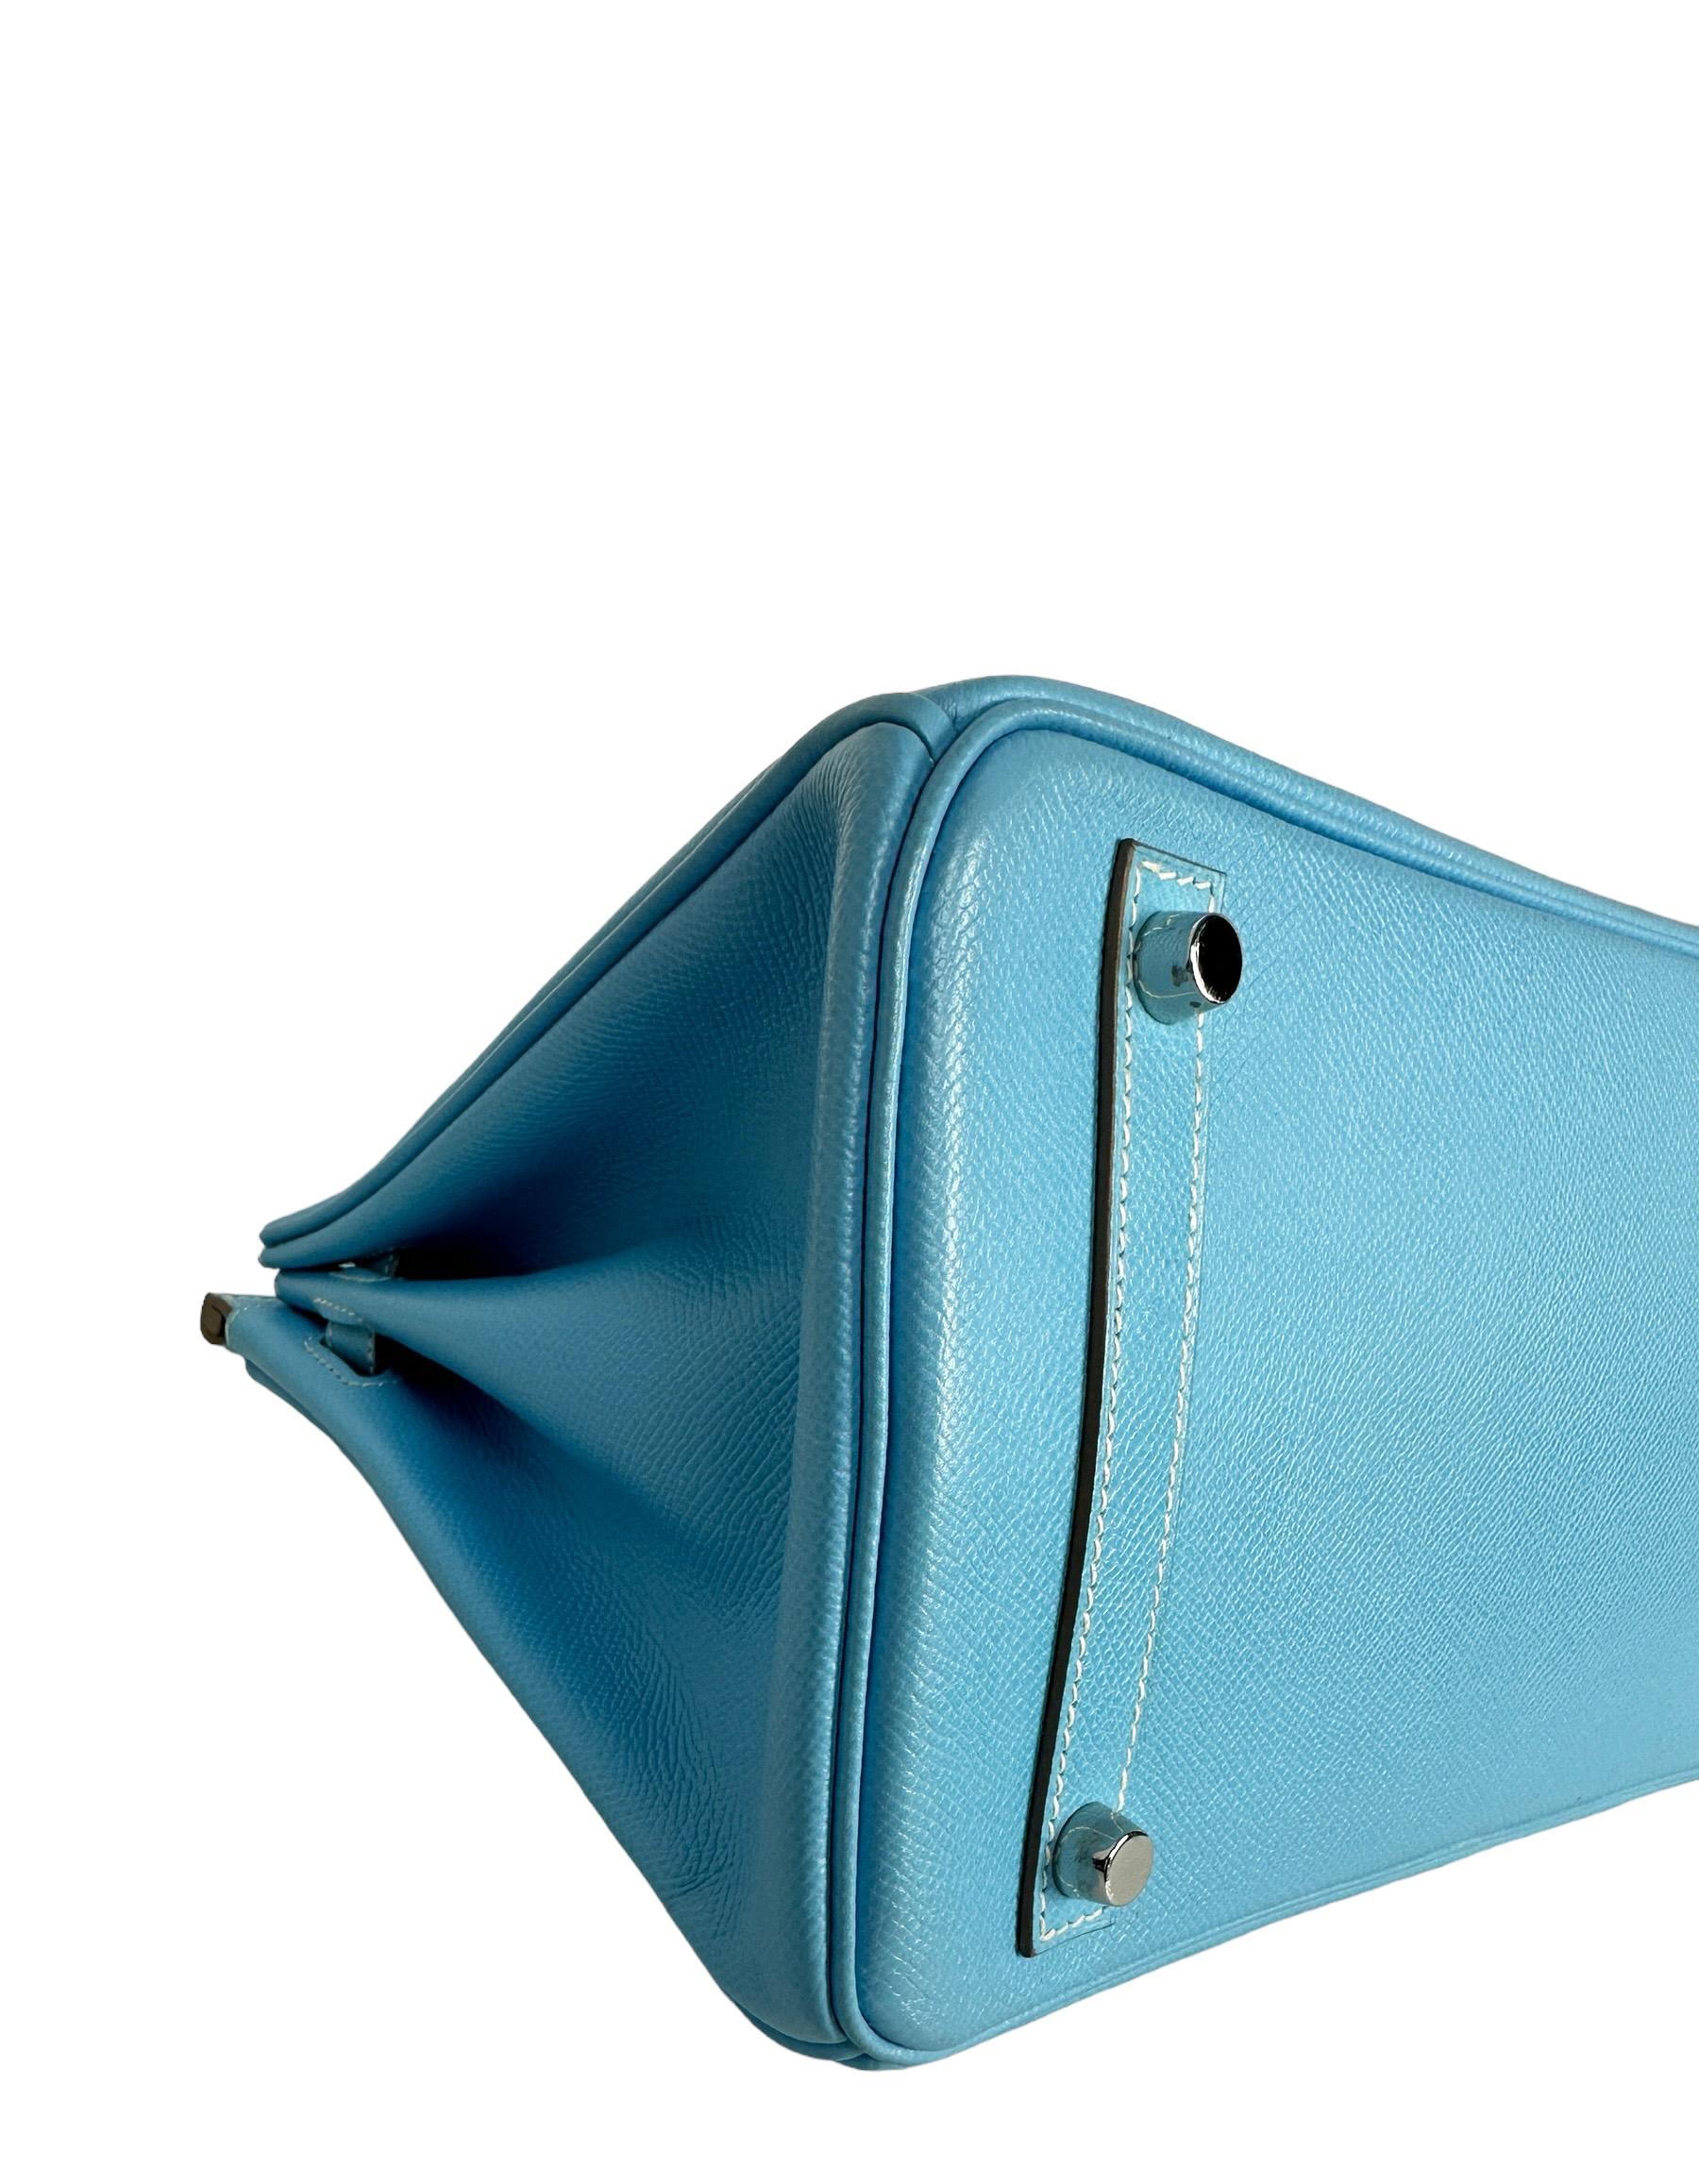 Hermes Blue Celeste/ Mykonos Epsom Leather 30cm Candy Birkin Bag PHW 1